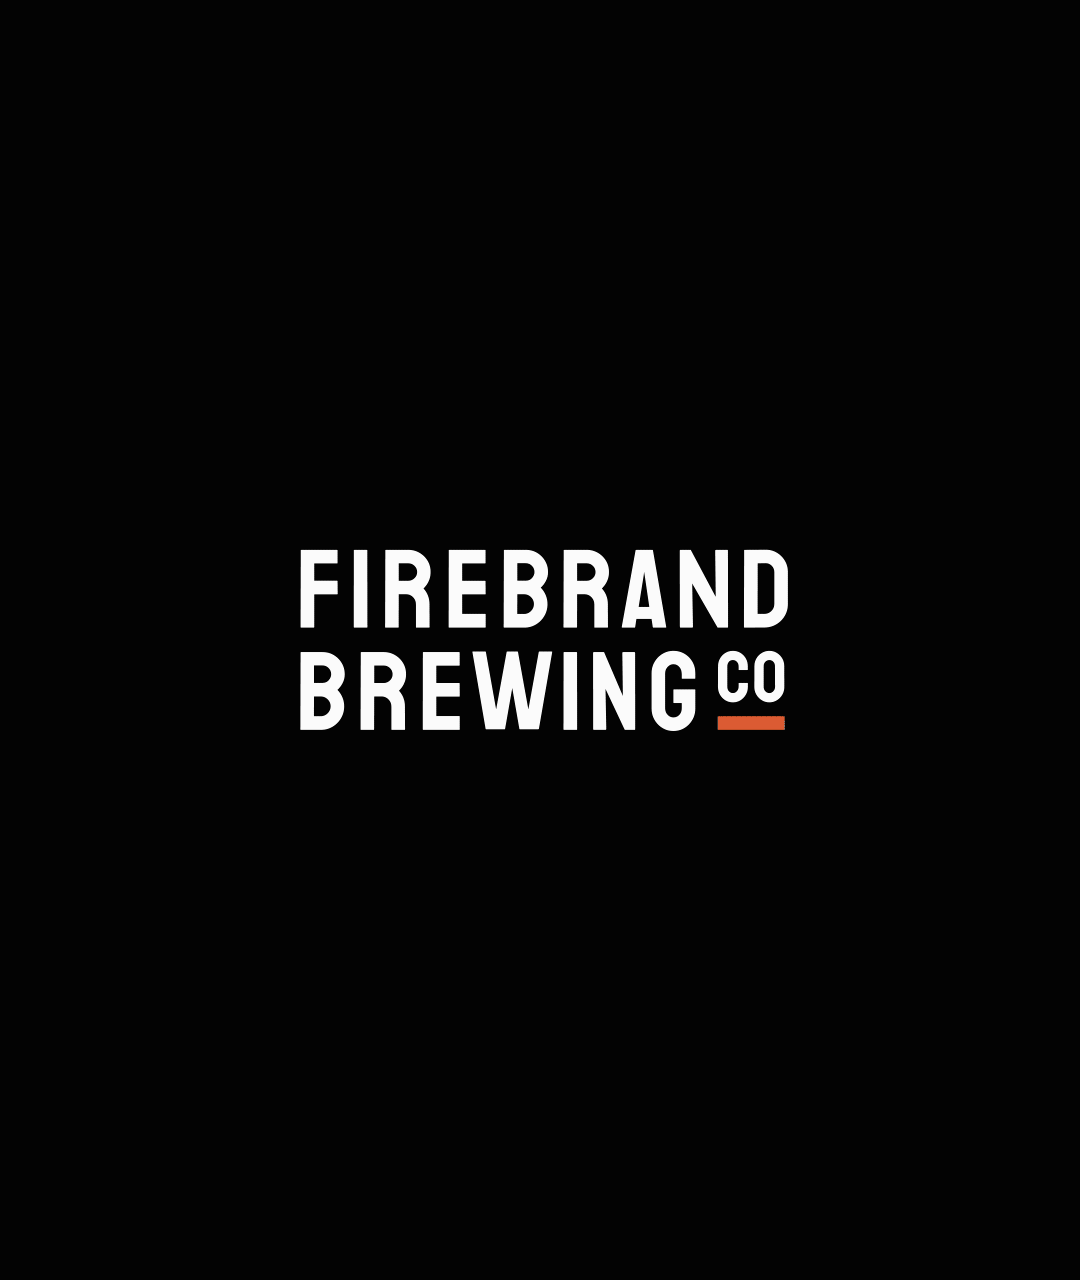 Firebrand craft brewery branding Kingdom & Sparrow